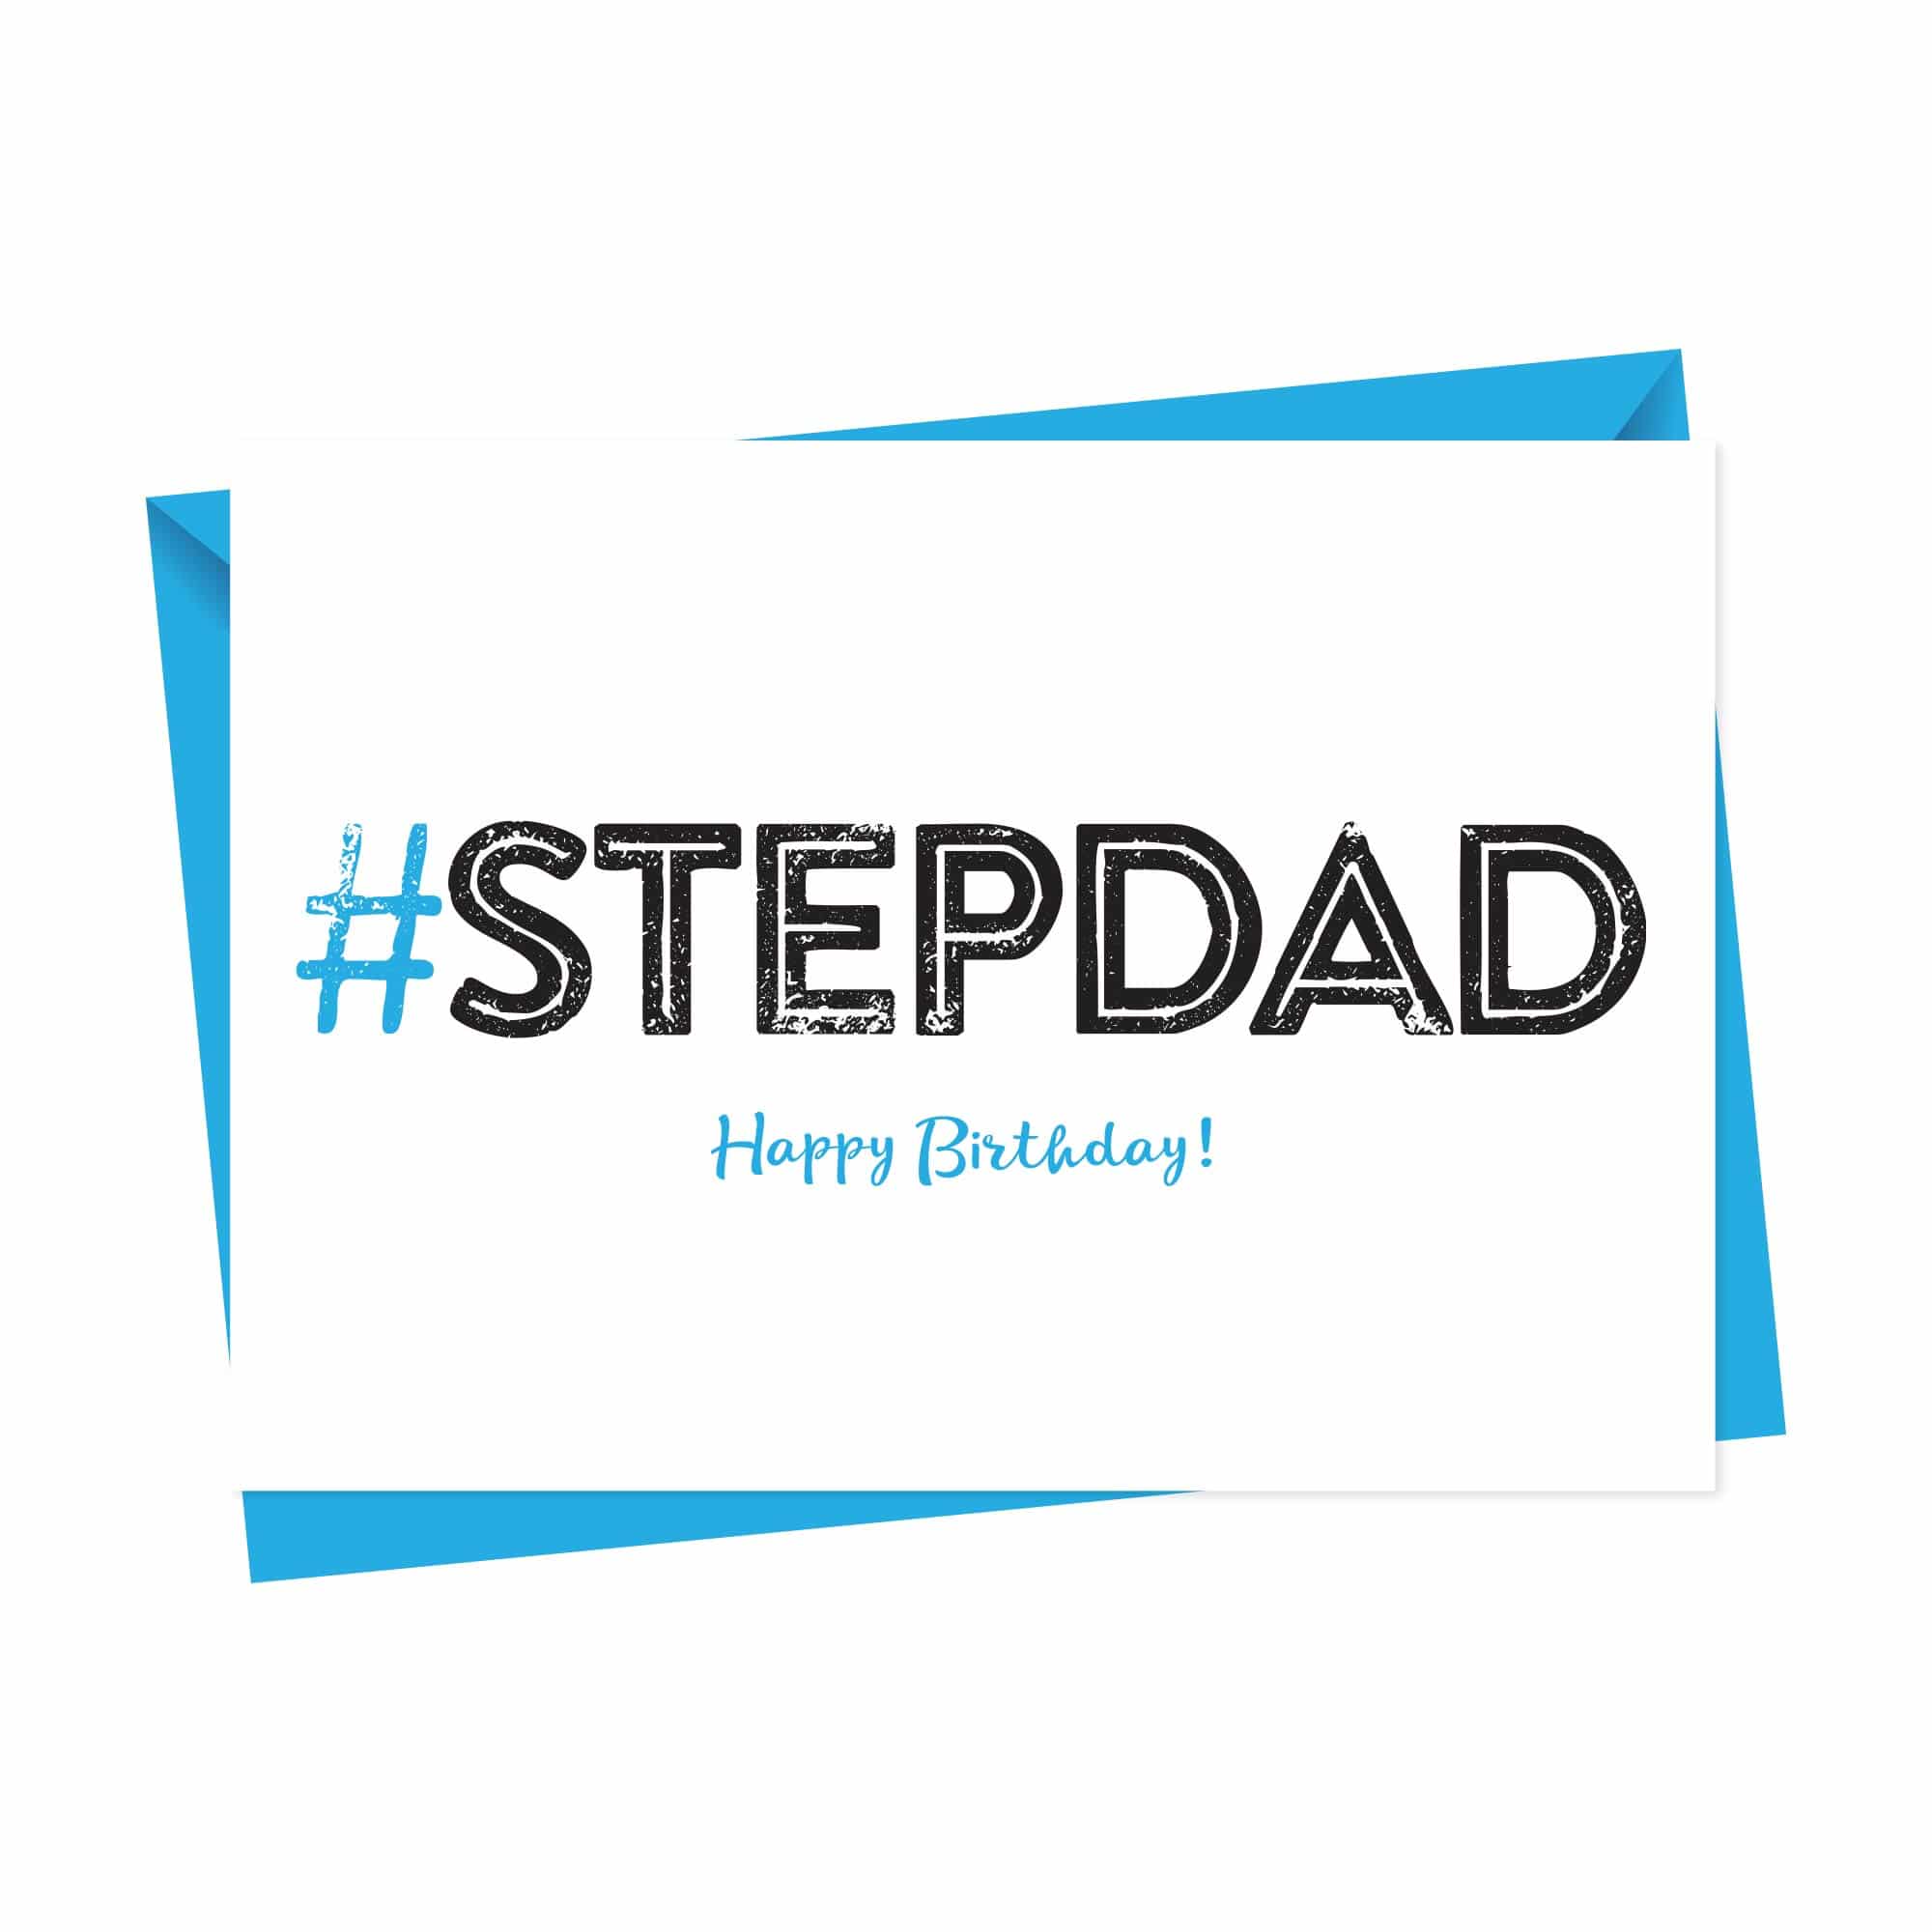 Hashtag Stepdad Birthday Card